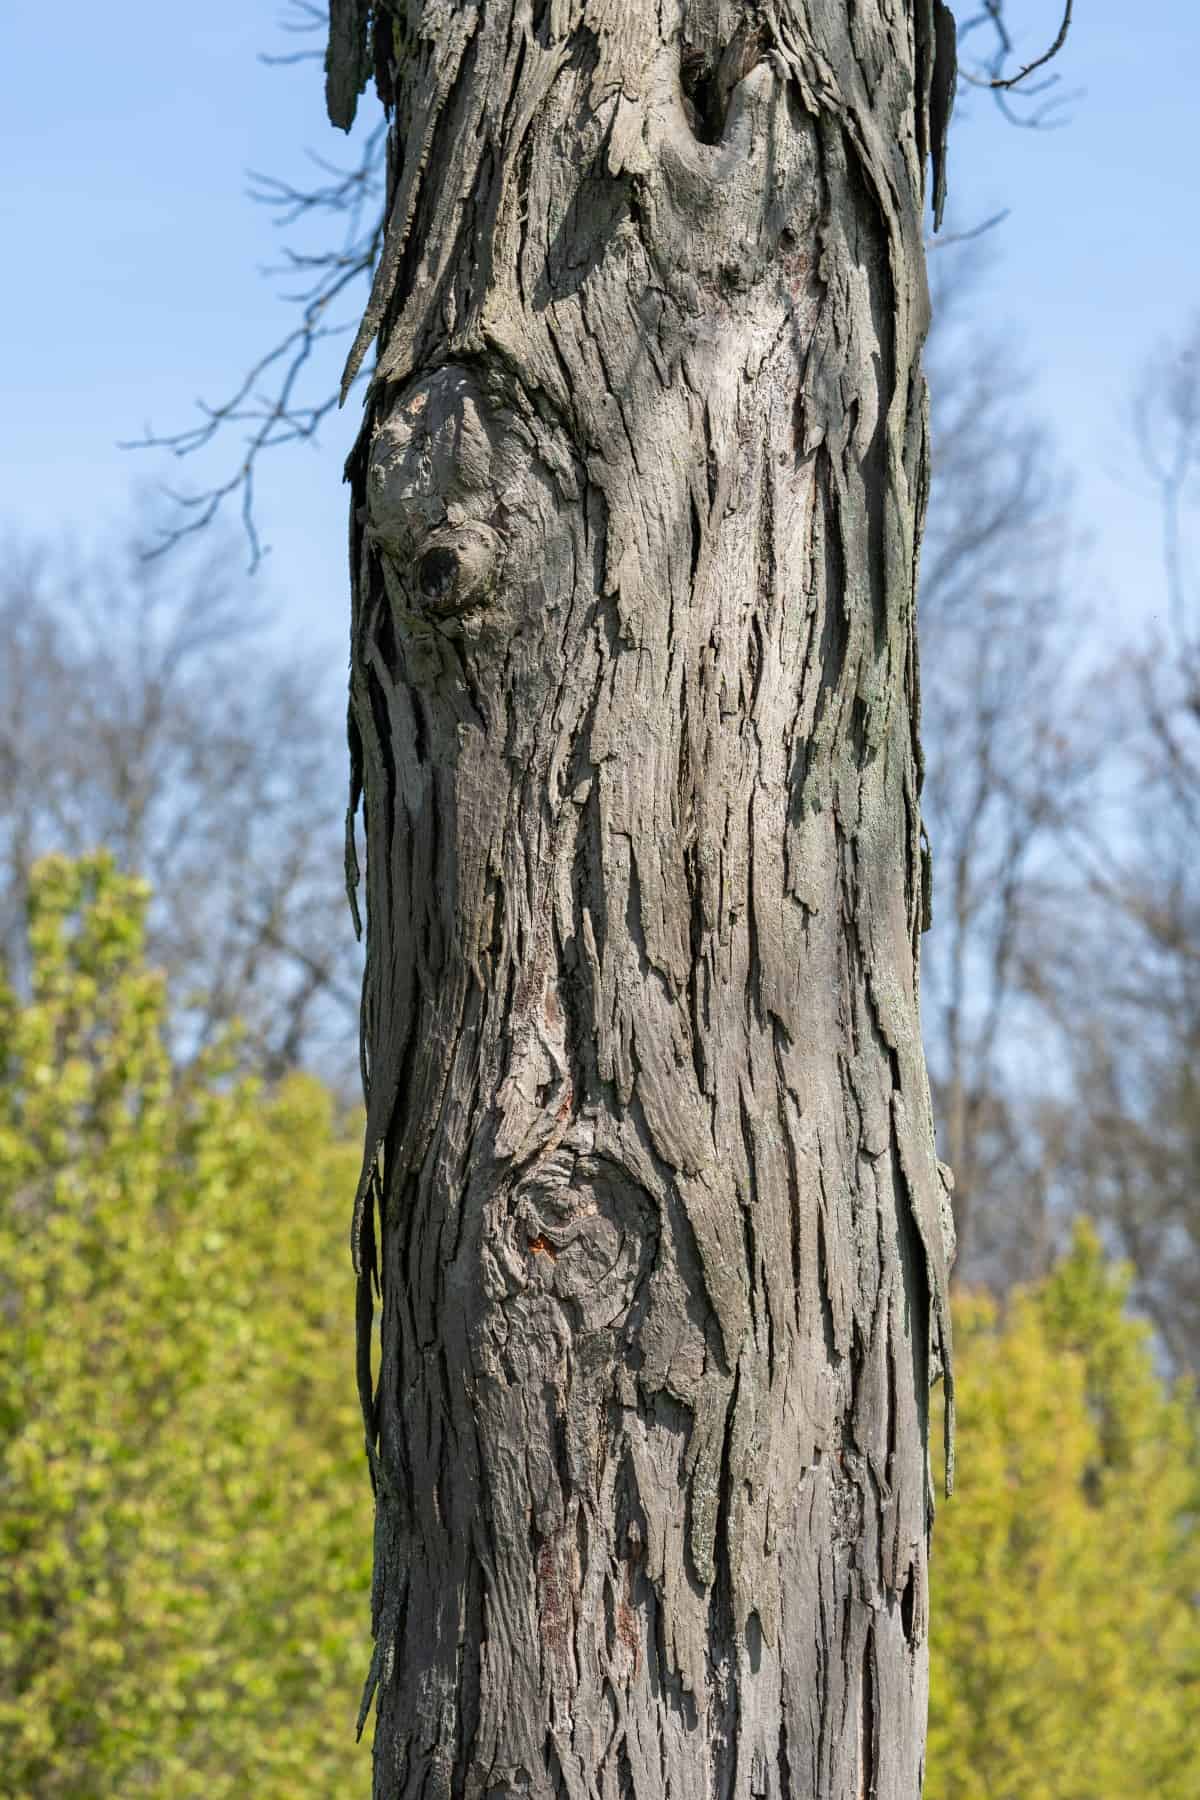 Close up of a shellbark hickory tree trunk and bark.